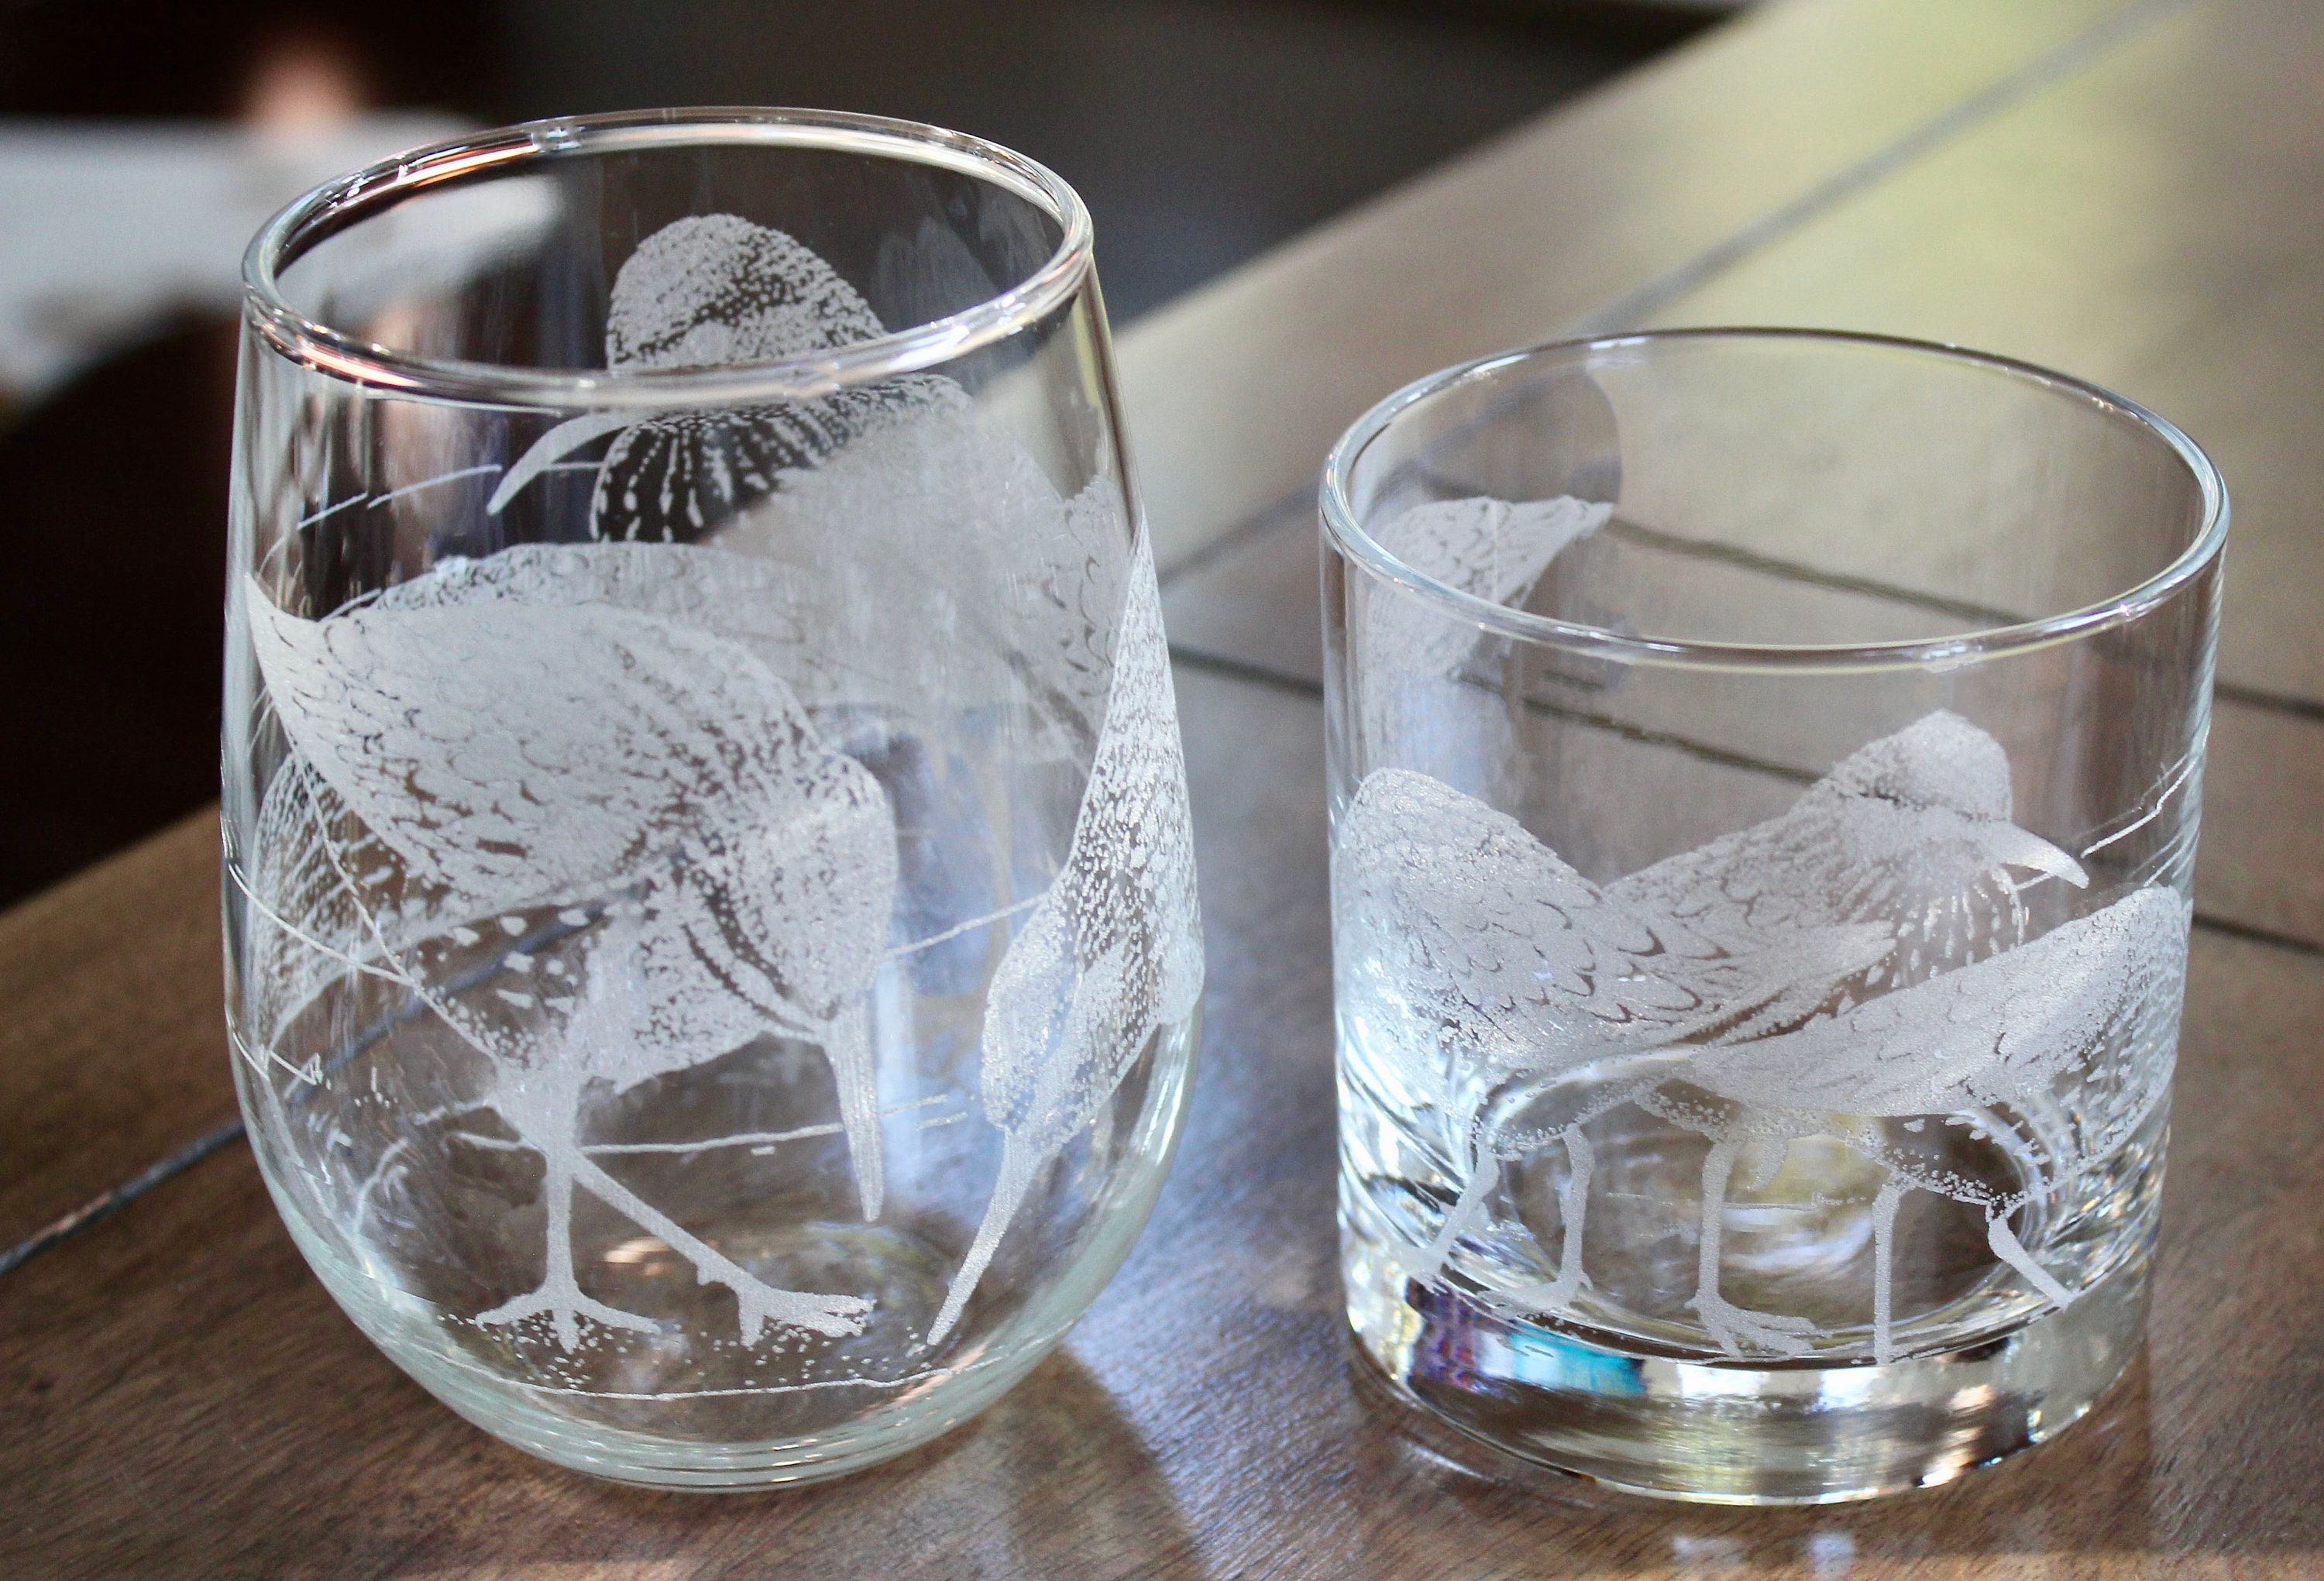 Herradura Pint Glass Beer Glasses 16 Oz, Modern Party Glassware Set of